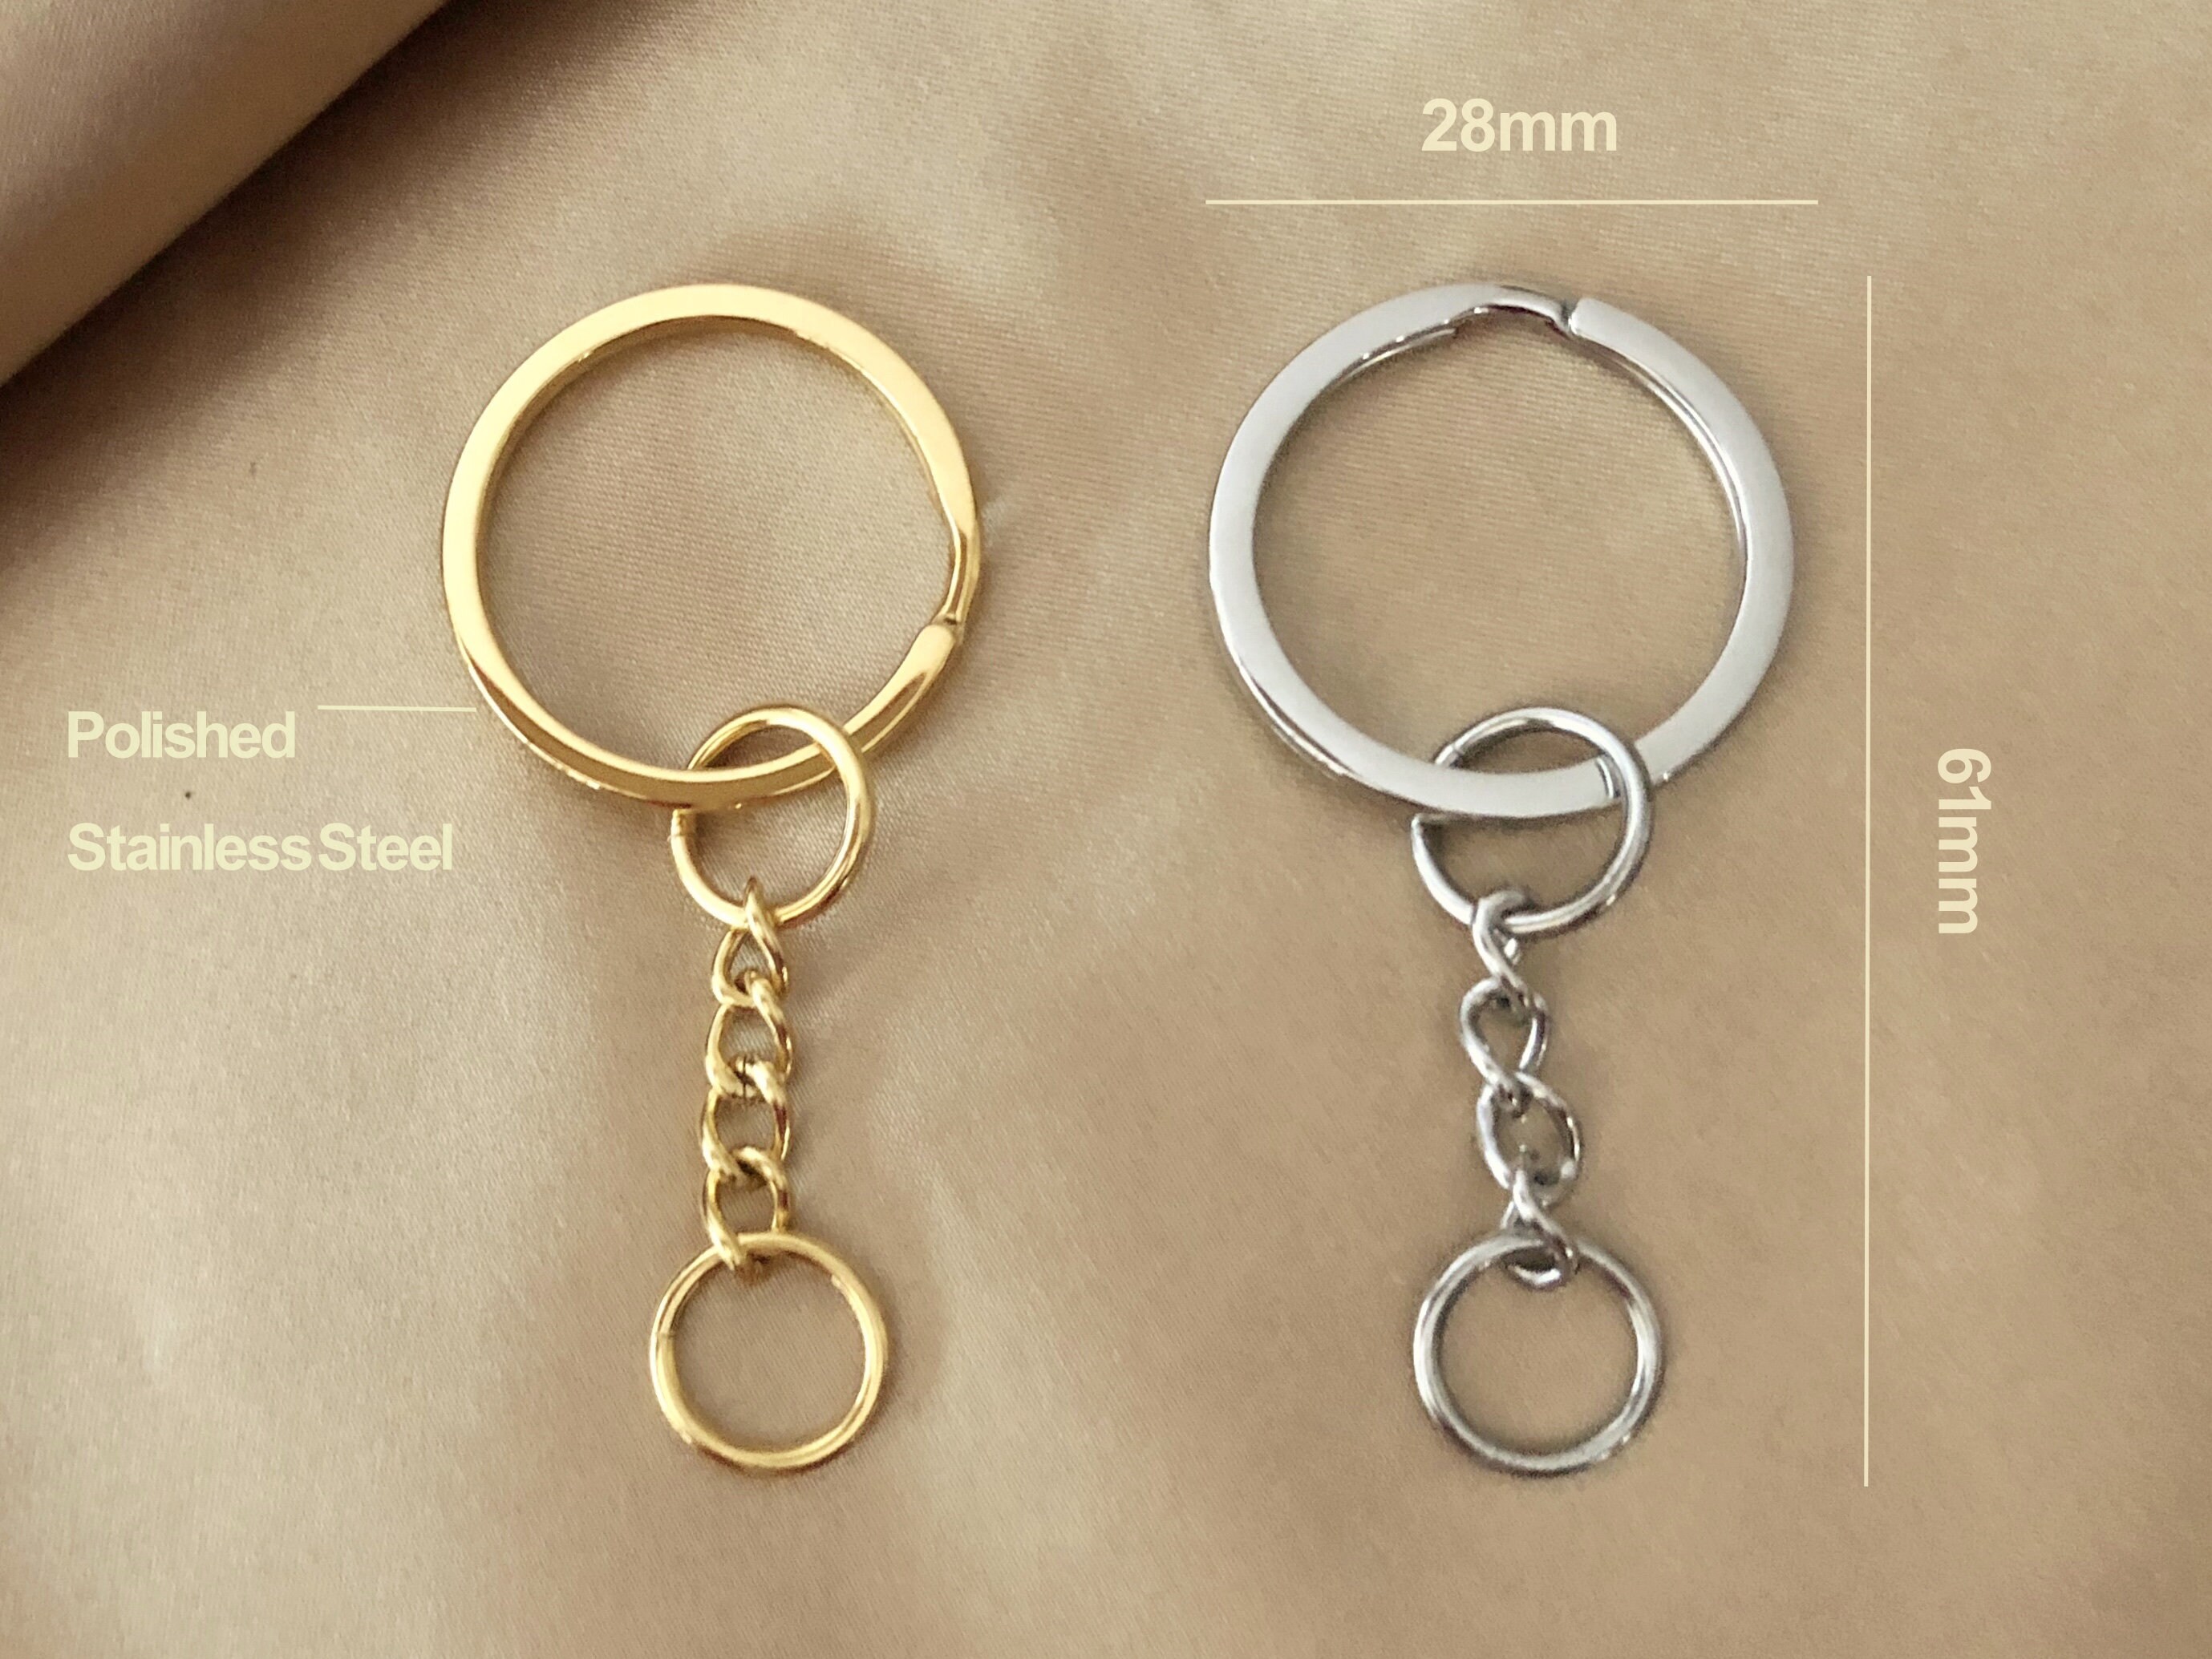 Wholesale Split Key Ring Keychains in Gold Silver Steel Bronze